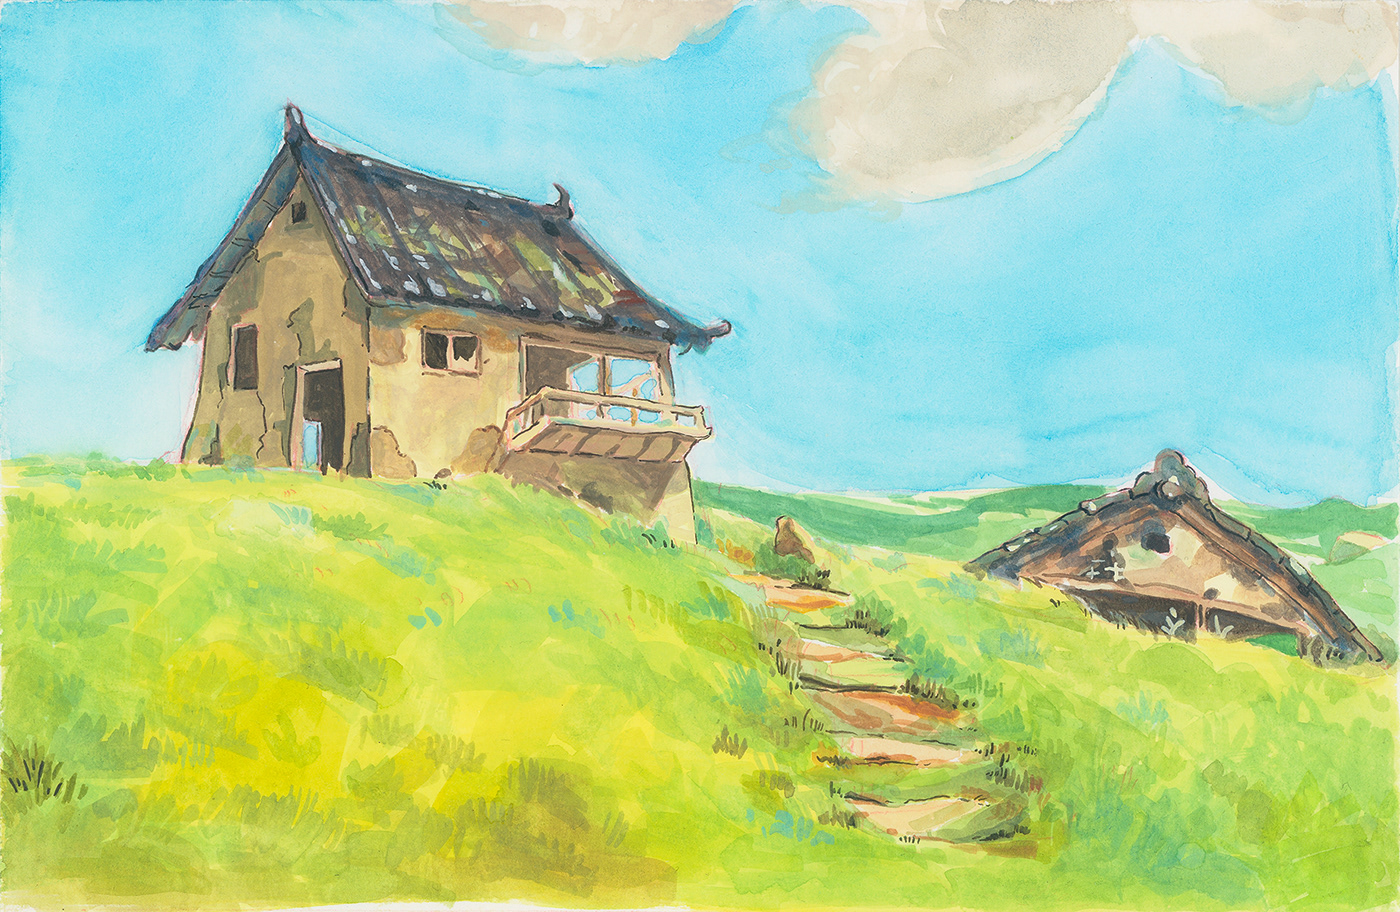 Ghibli Hayao Miyazaki princess mononoke Spirited Away Studio Ghibli Studio Ghibli art Studio Ghibli Redraw